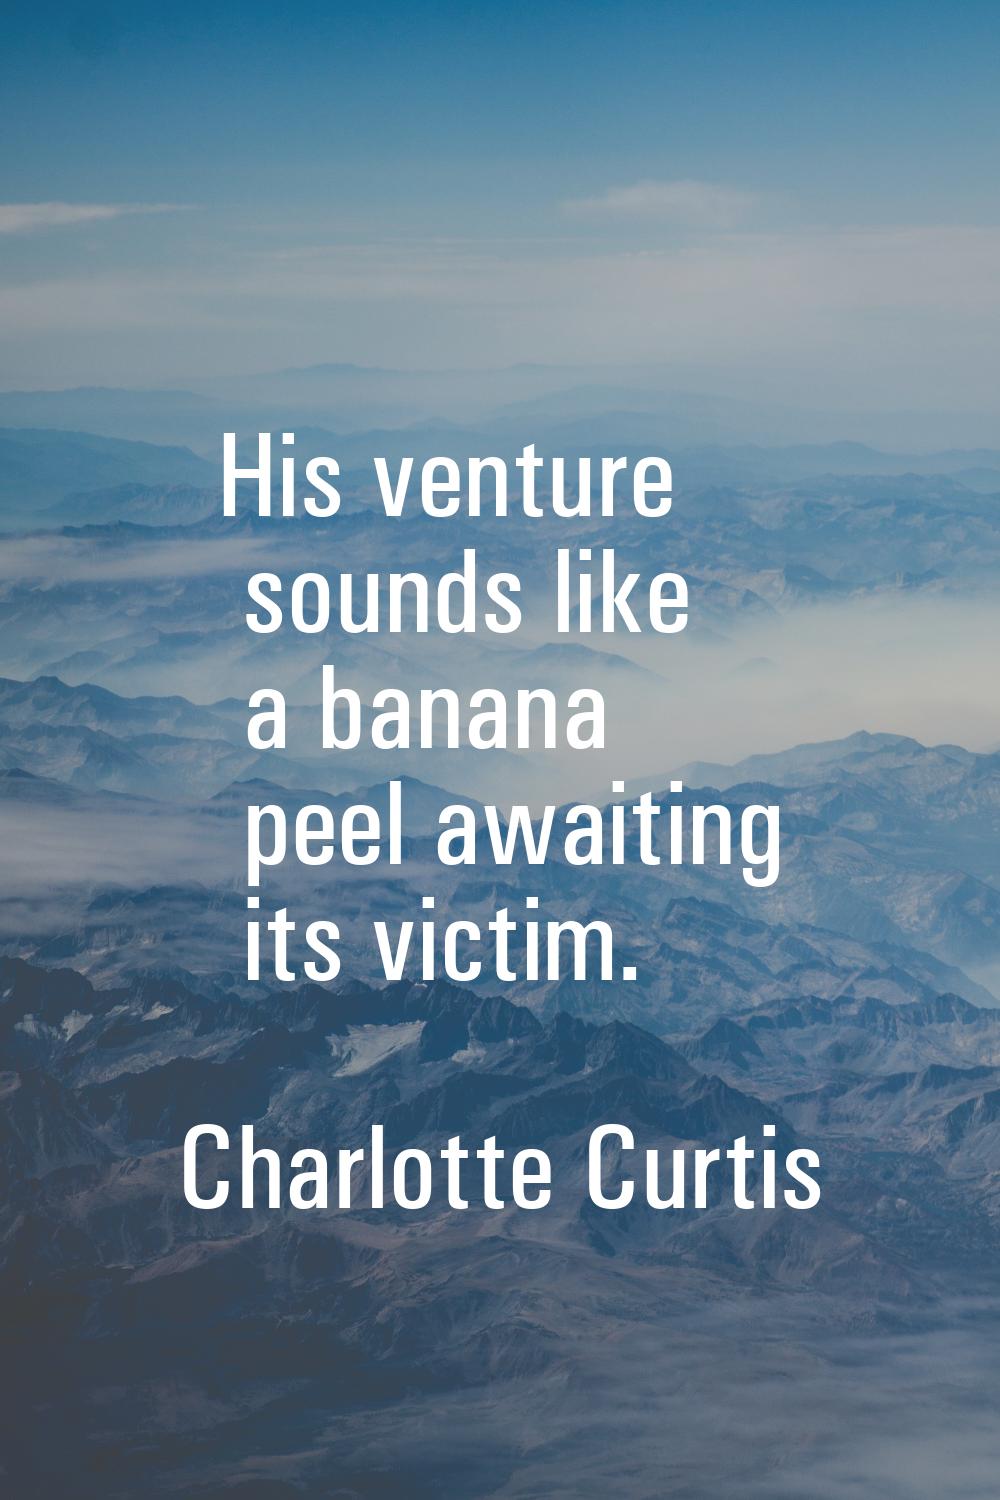 His venture sounds like a banana peel awaiting its victim.